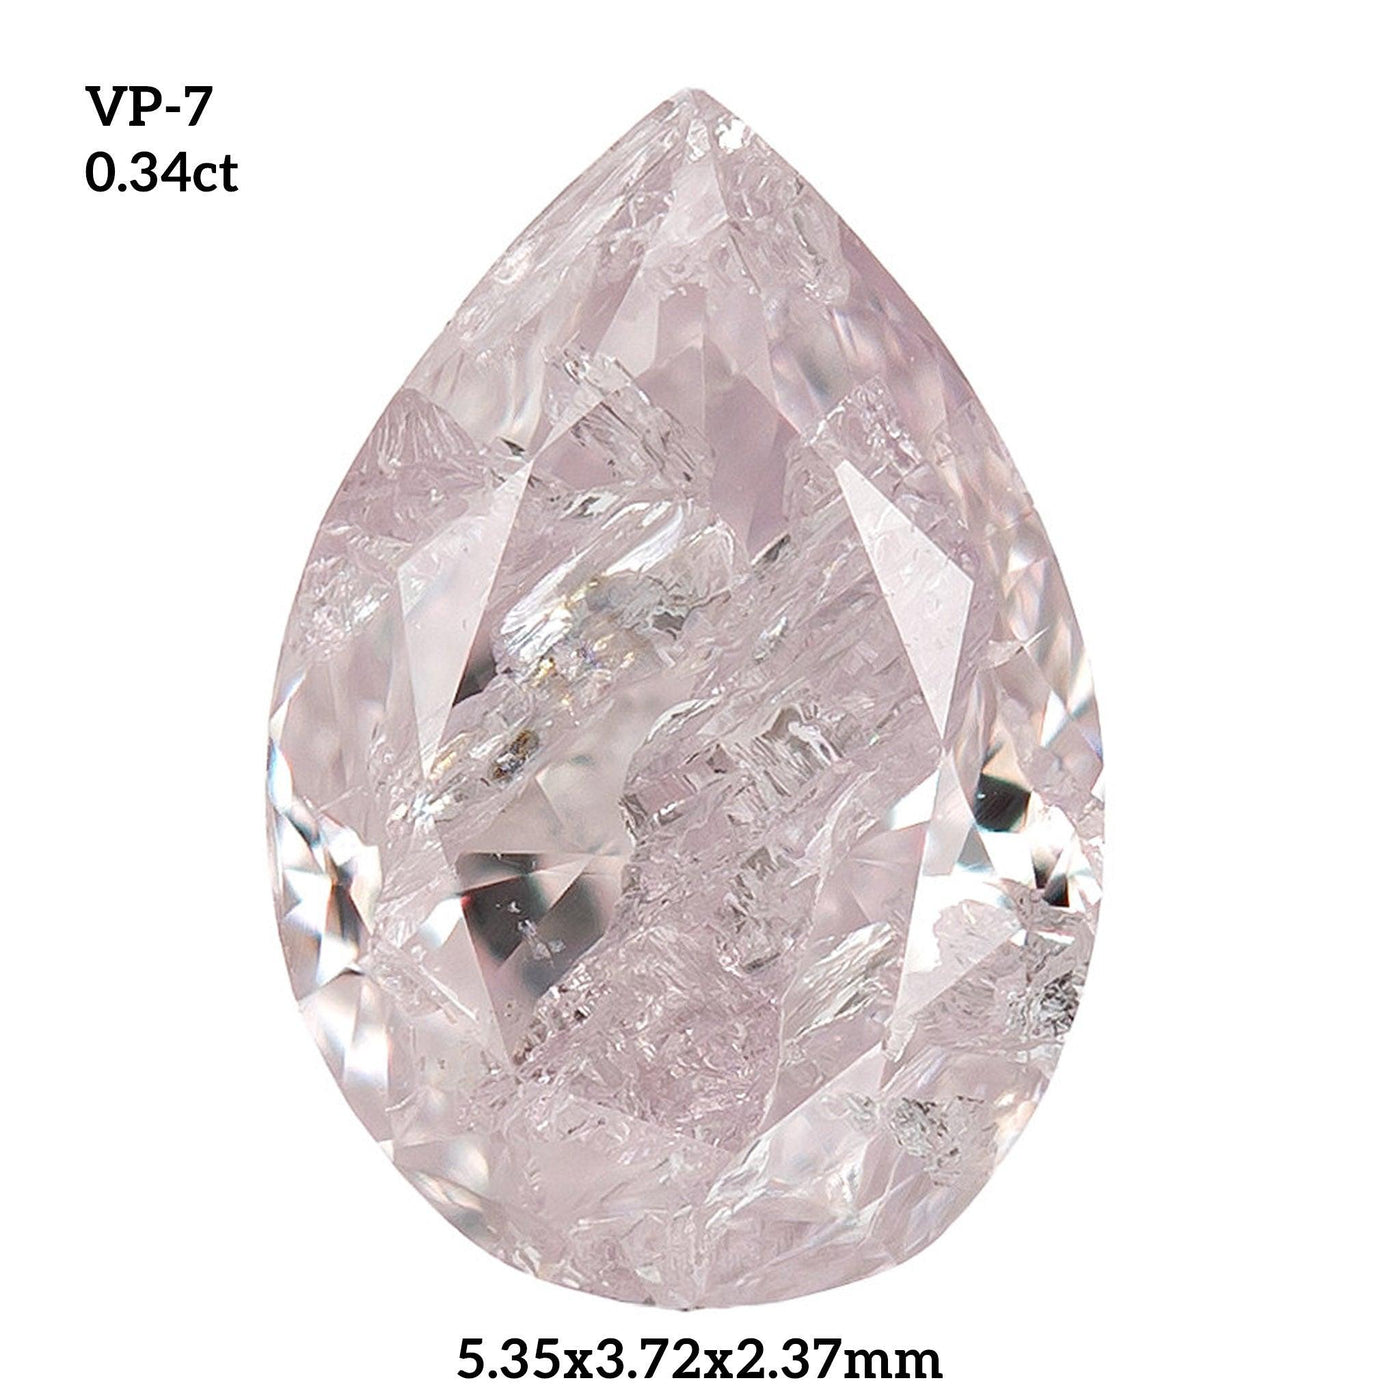 VP7 - Vivid pink pear diamond